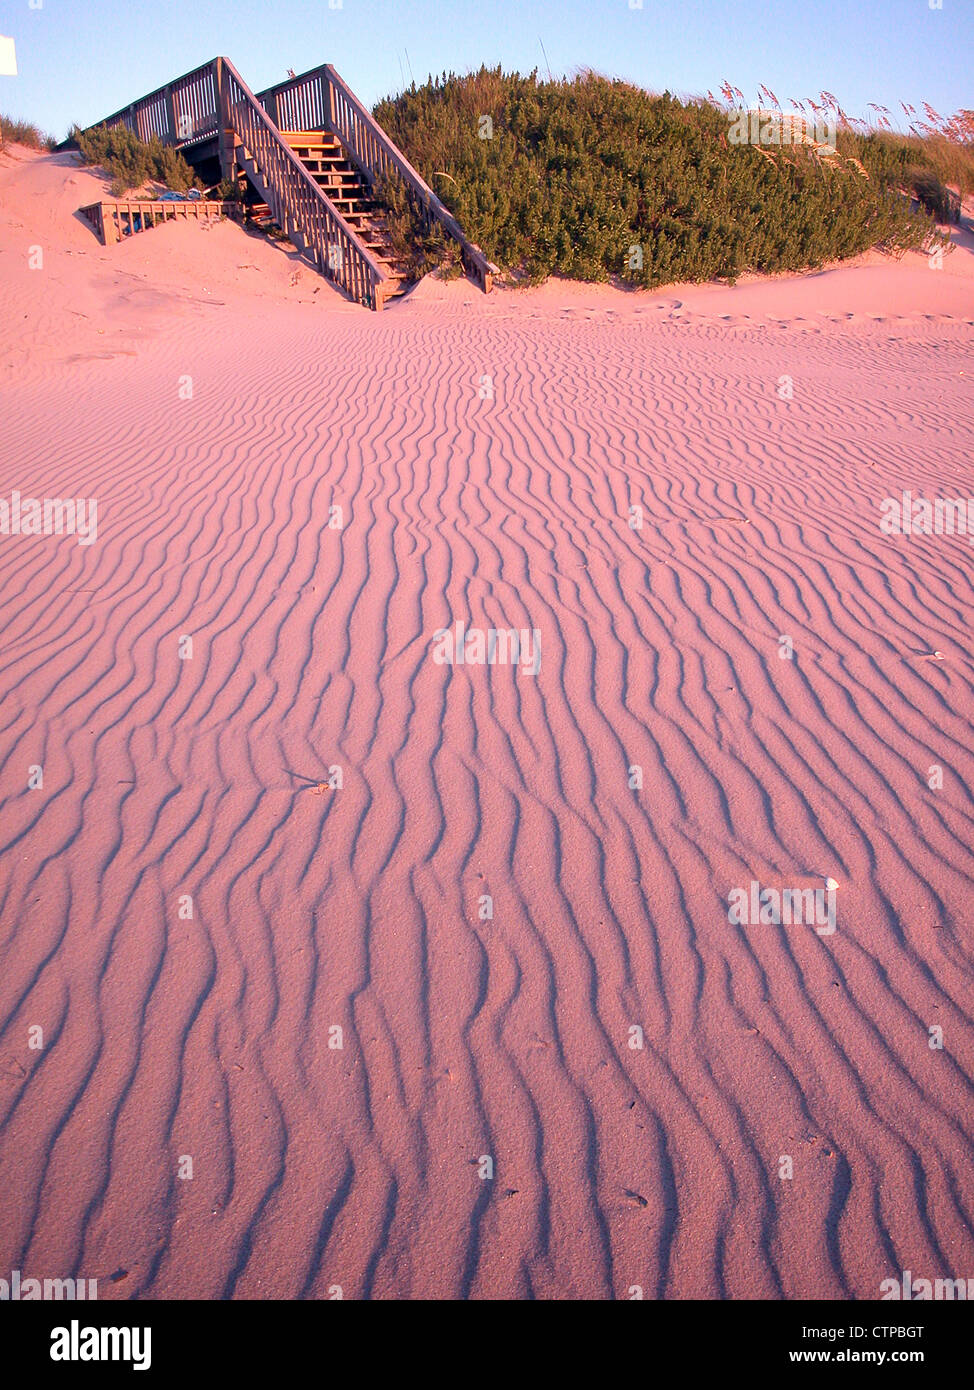 sand dune ripples on a beach Stock Photo